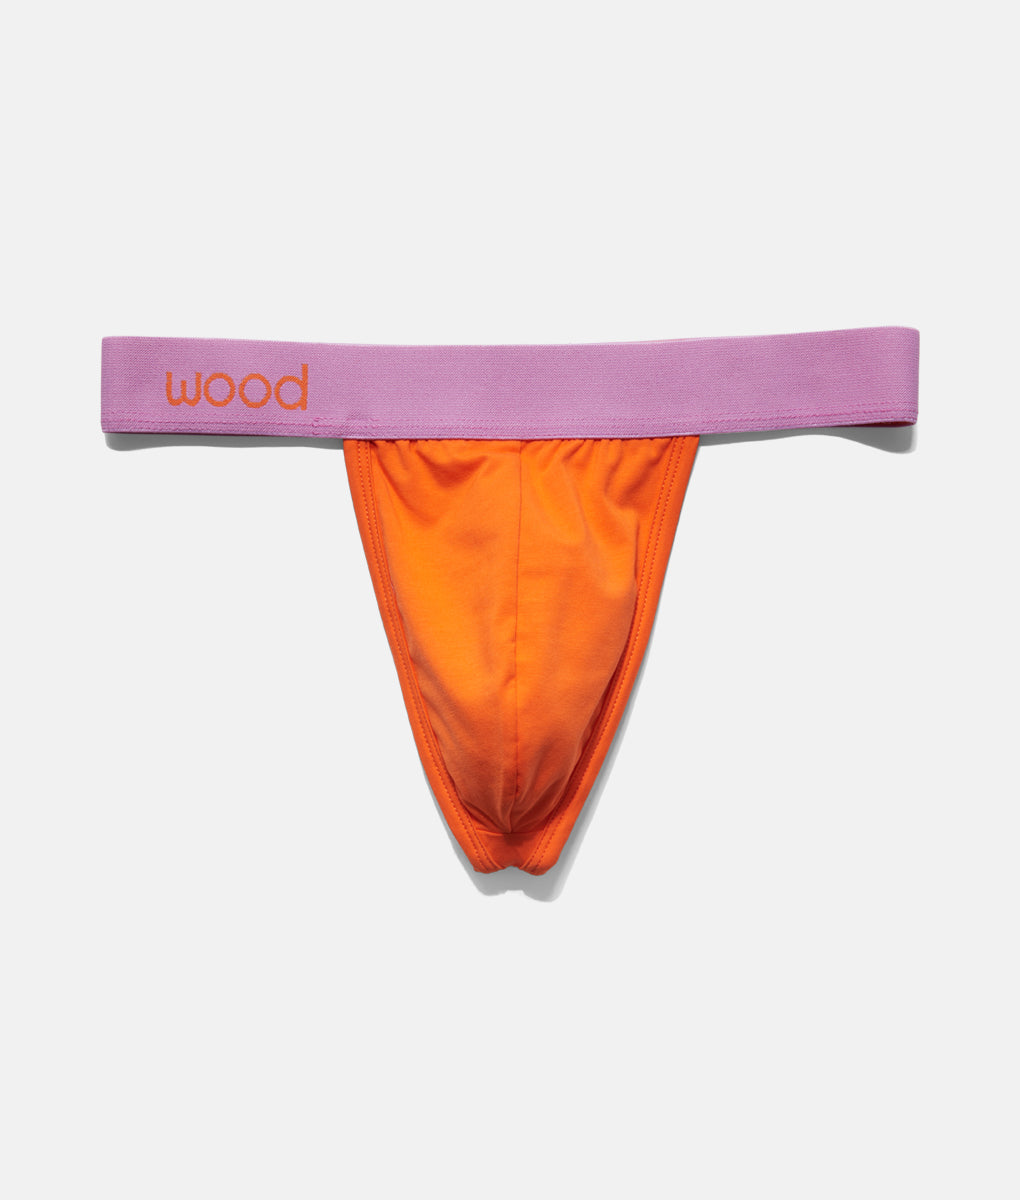 Wood Underwear Men's Thong in Azure Contrast - Sage & Willow